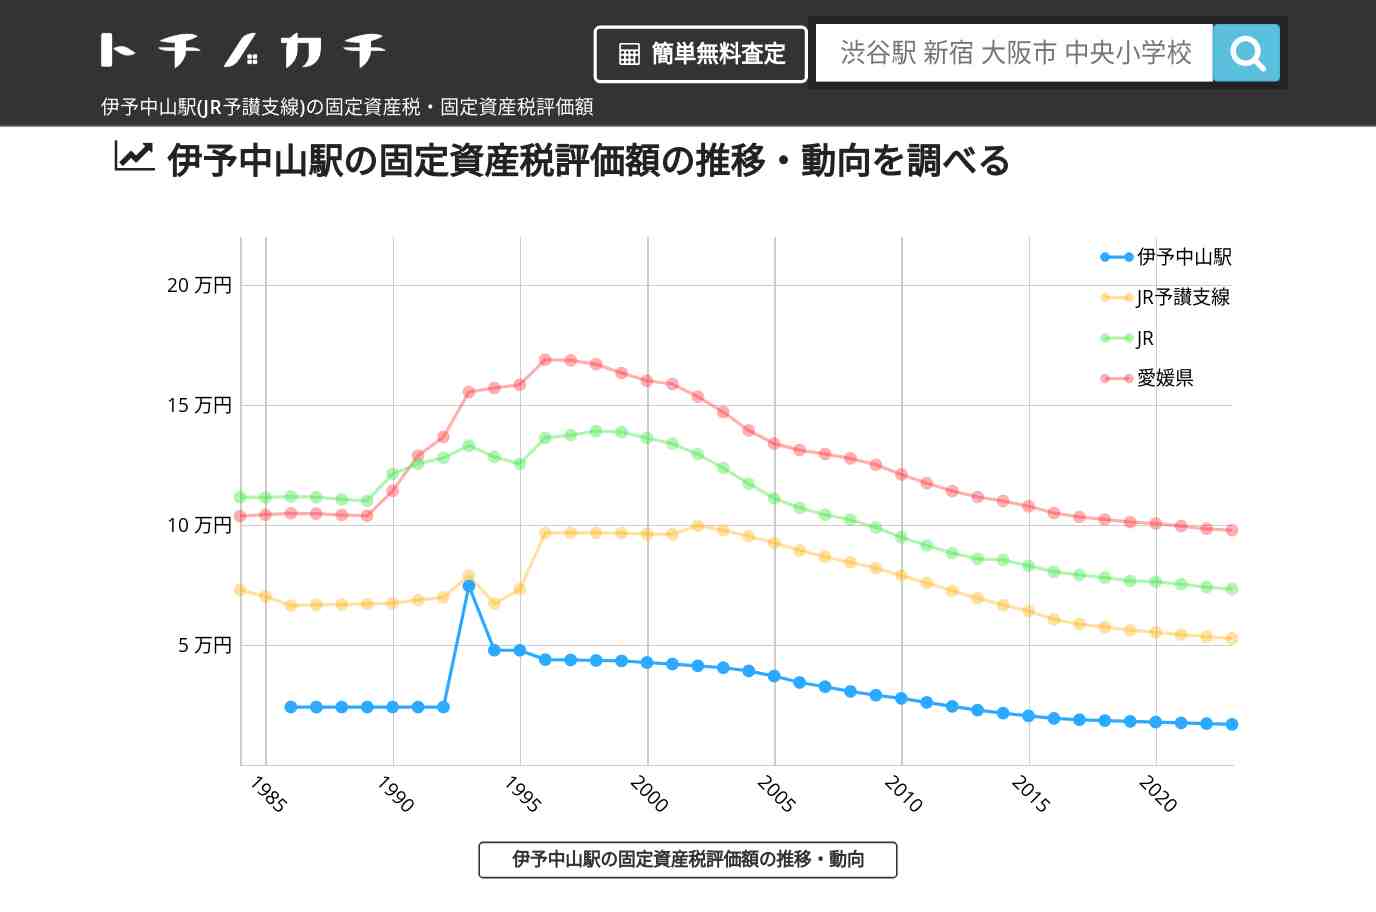 伊予中山駅(JR予讃支線)の固定資産税・固定資産税評価額 | トチノカチ